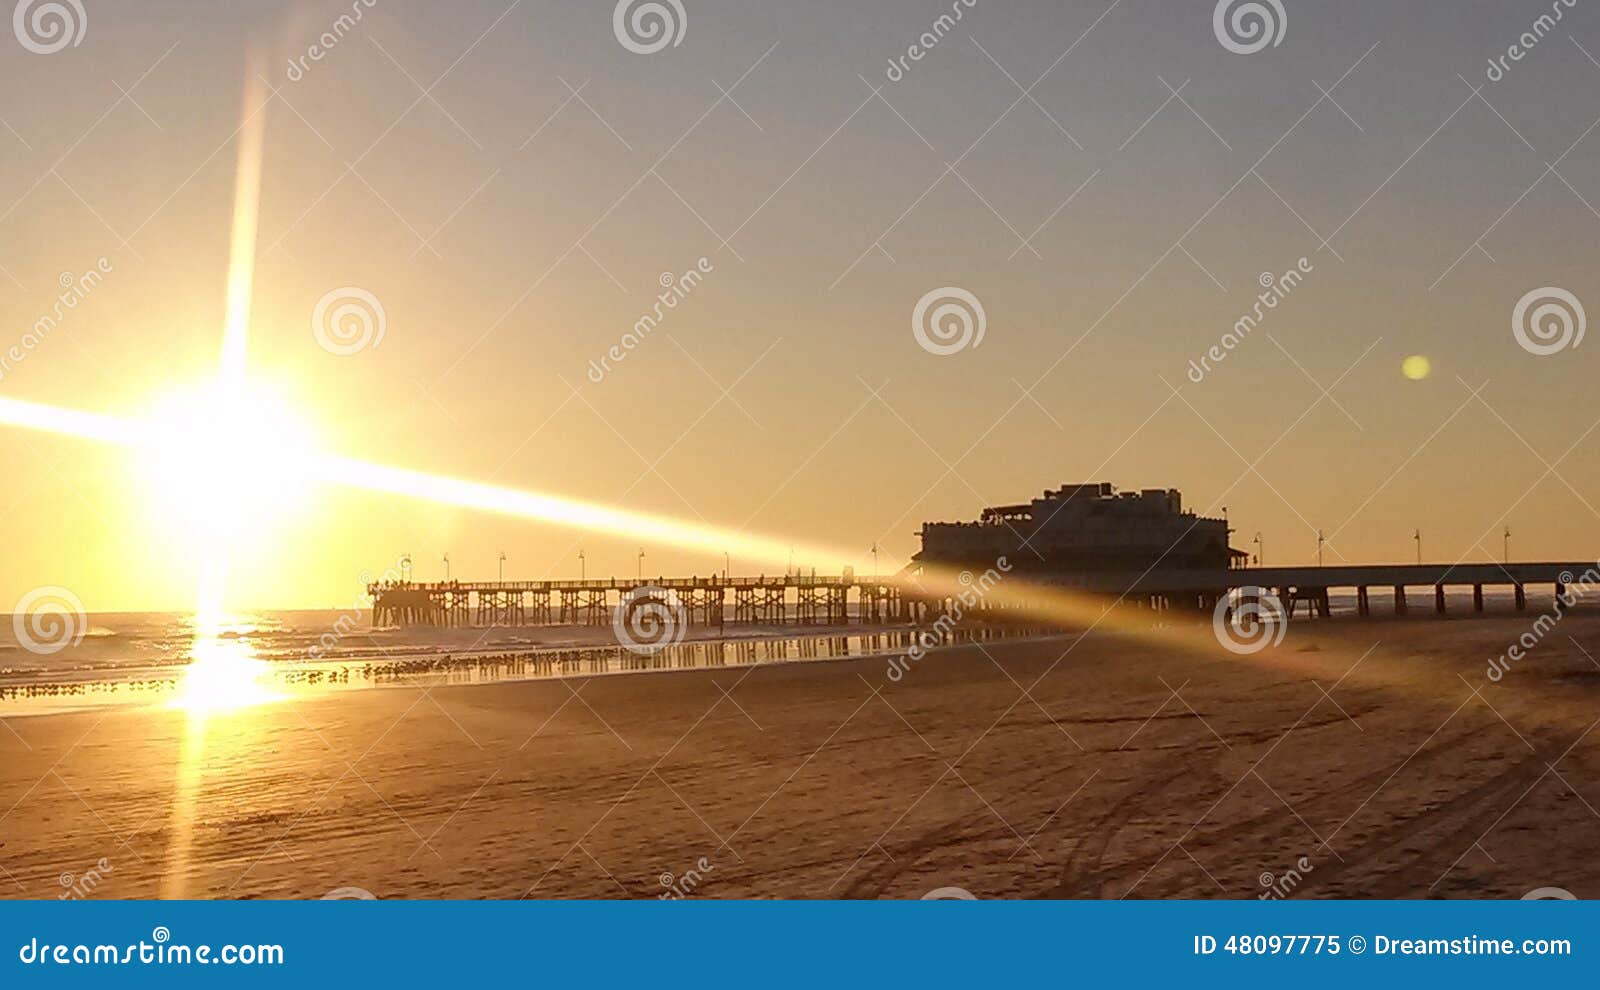 Daytona Beach Pier during sunrise. The sunrise in Daytona at the beach.